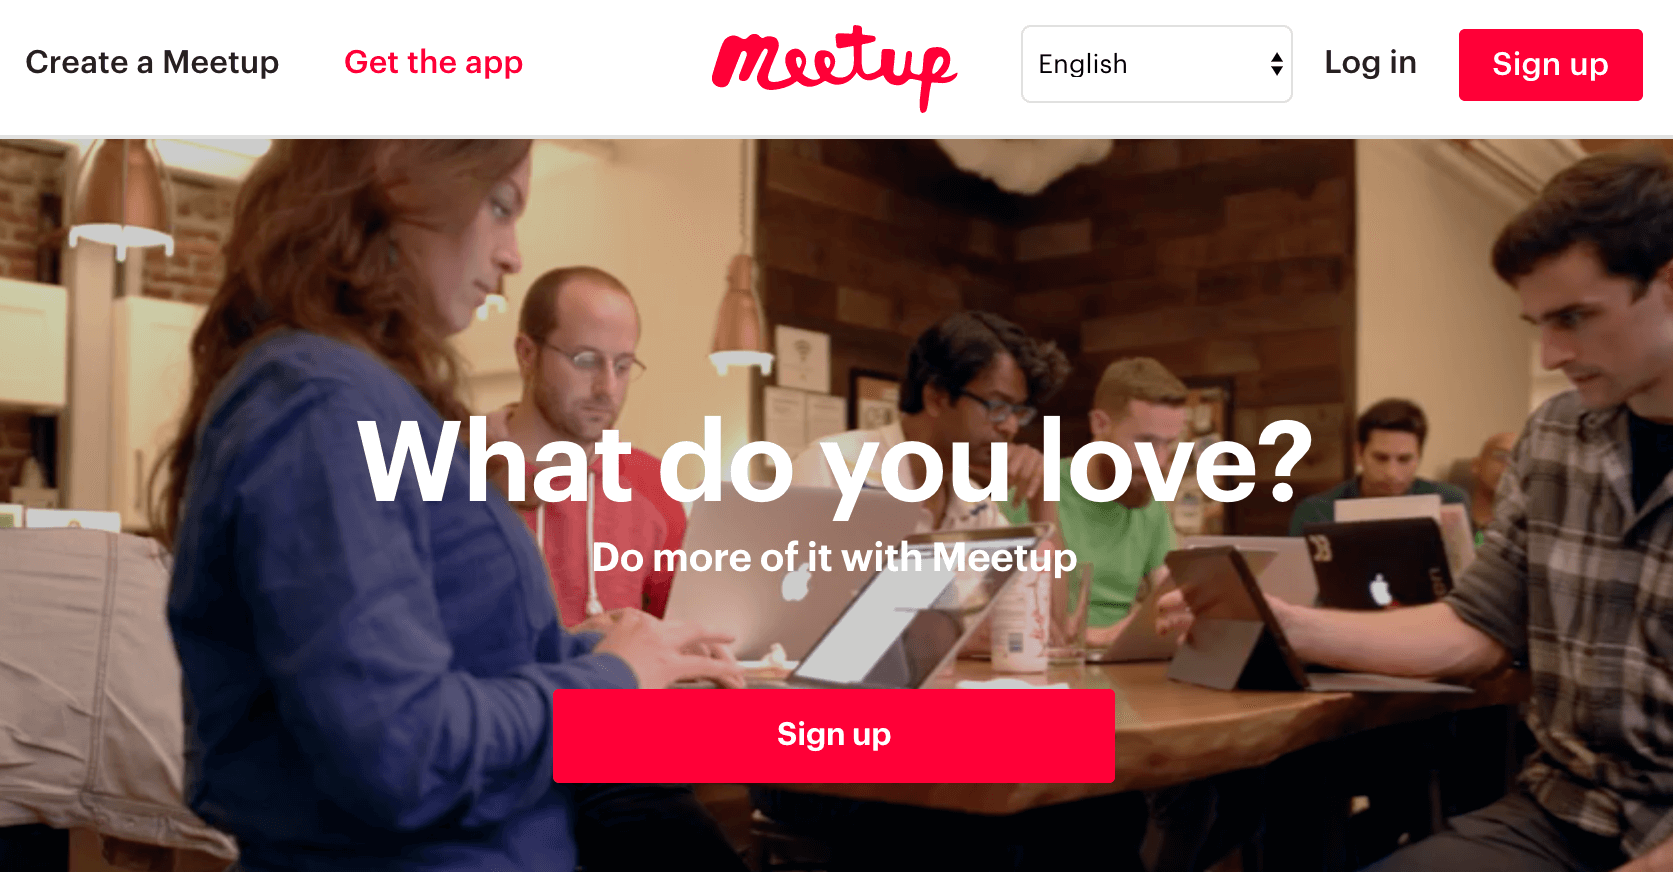 The Meetup homepage